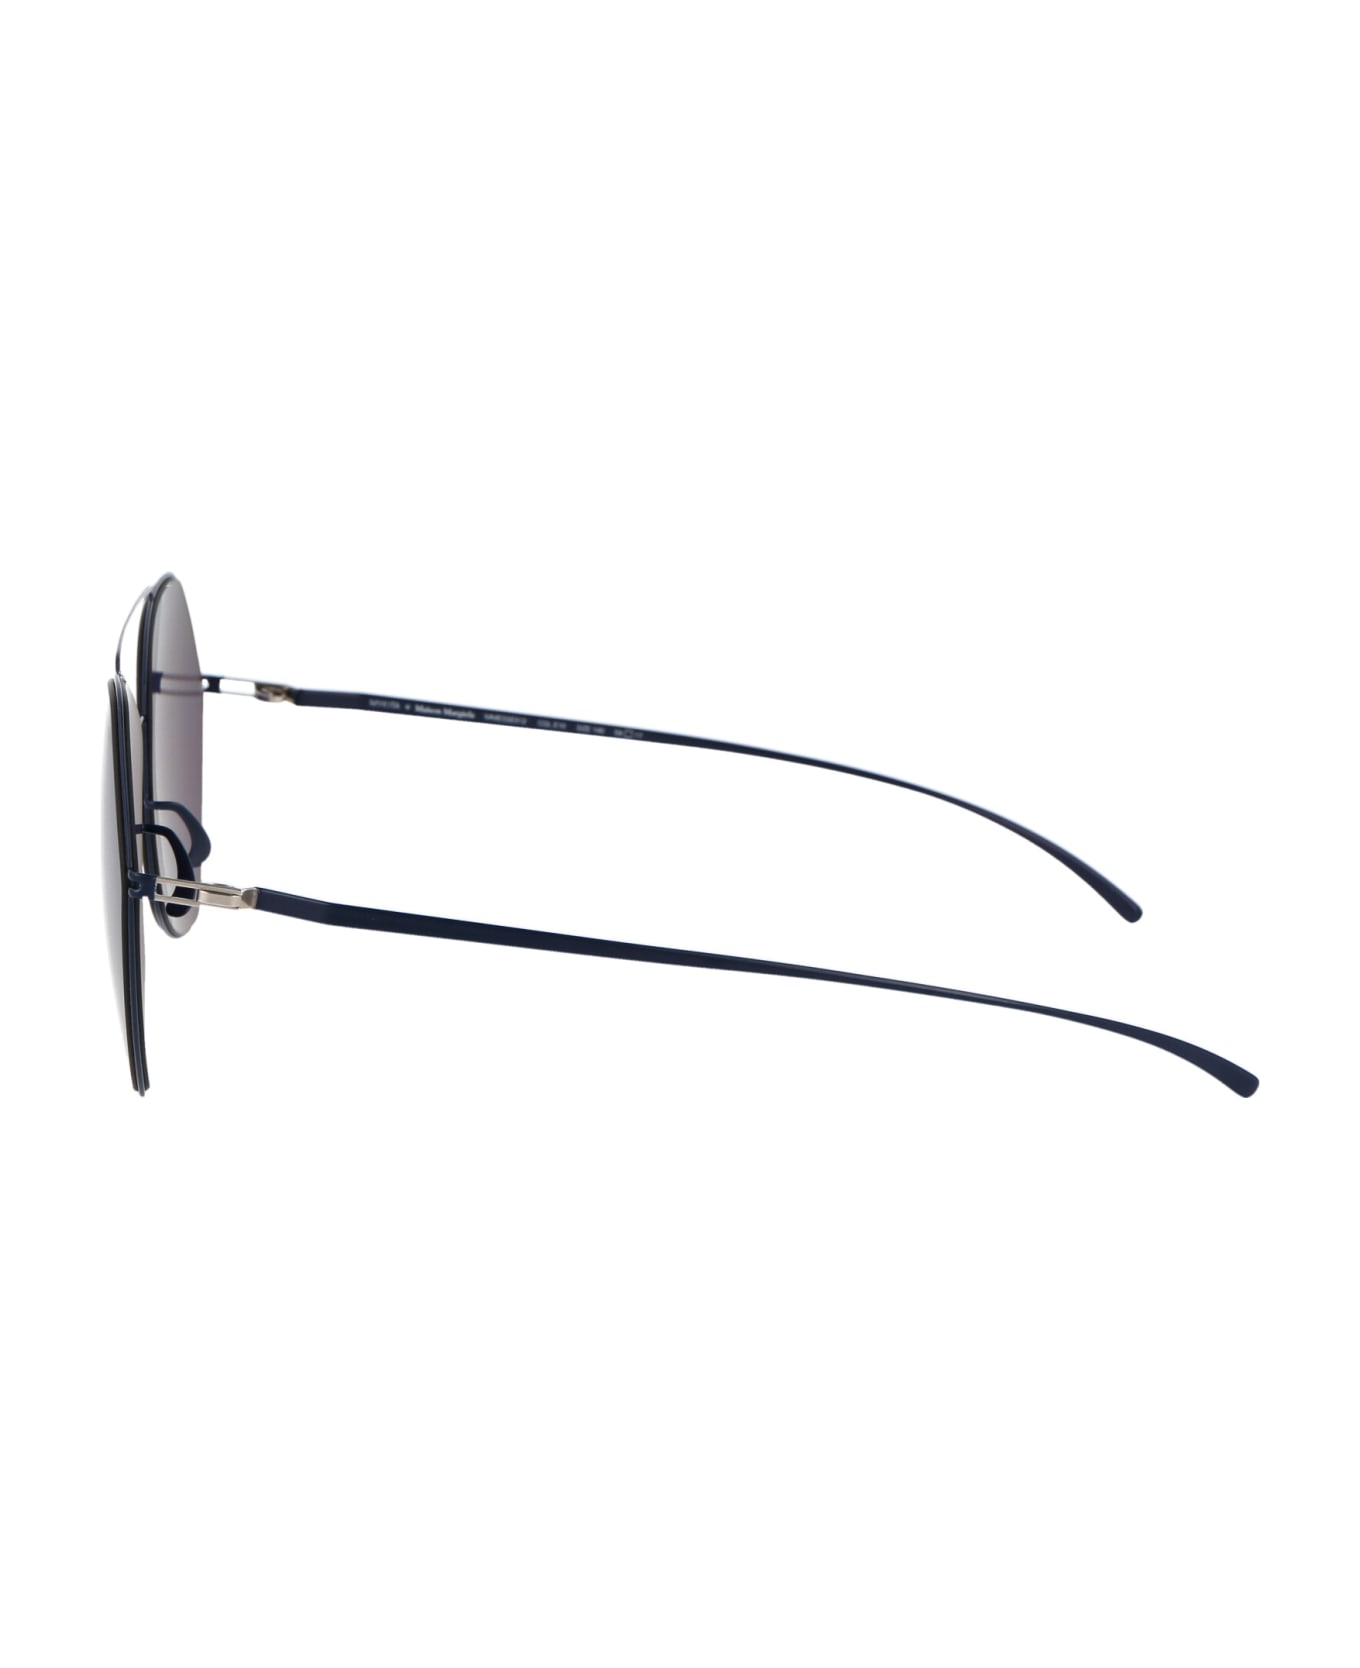 Mykita Mmesse012 Sunglasses - 261 E10 Dark Blue Indigo Solid